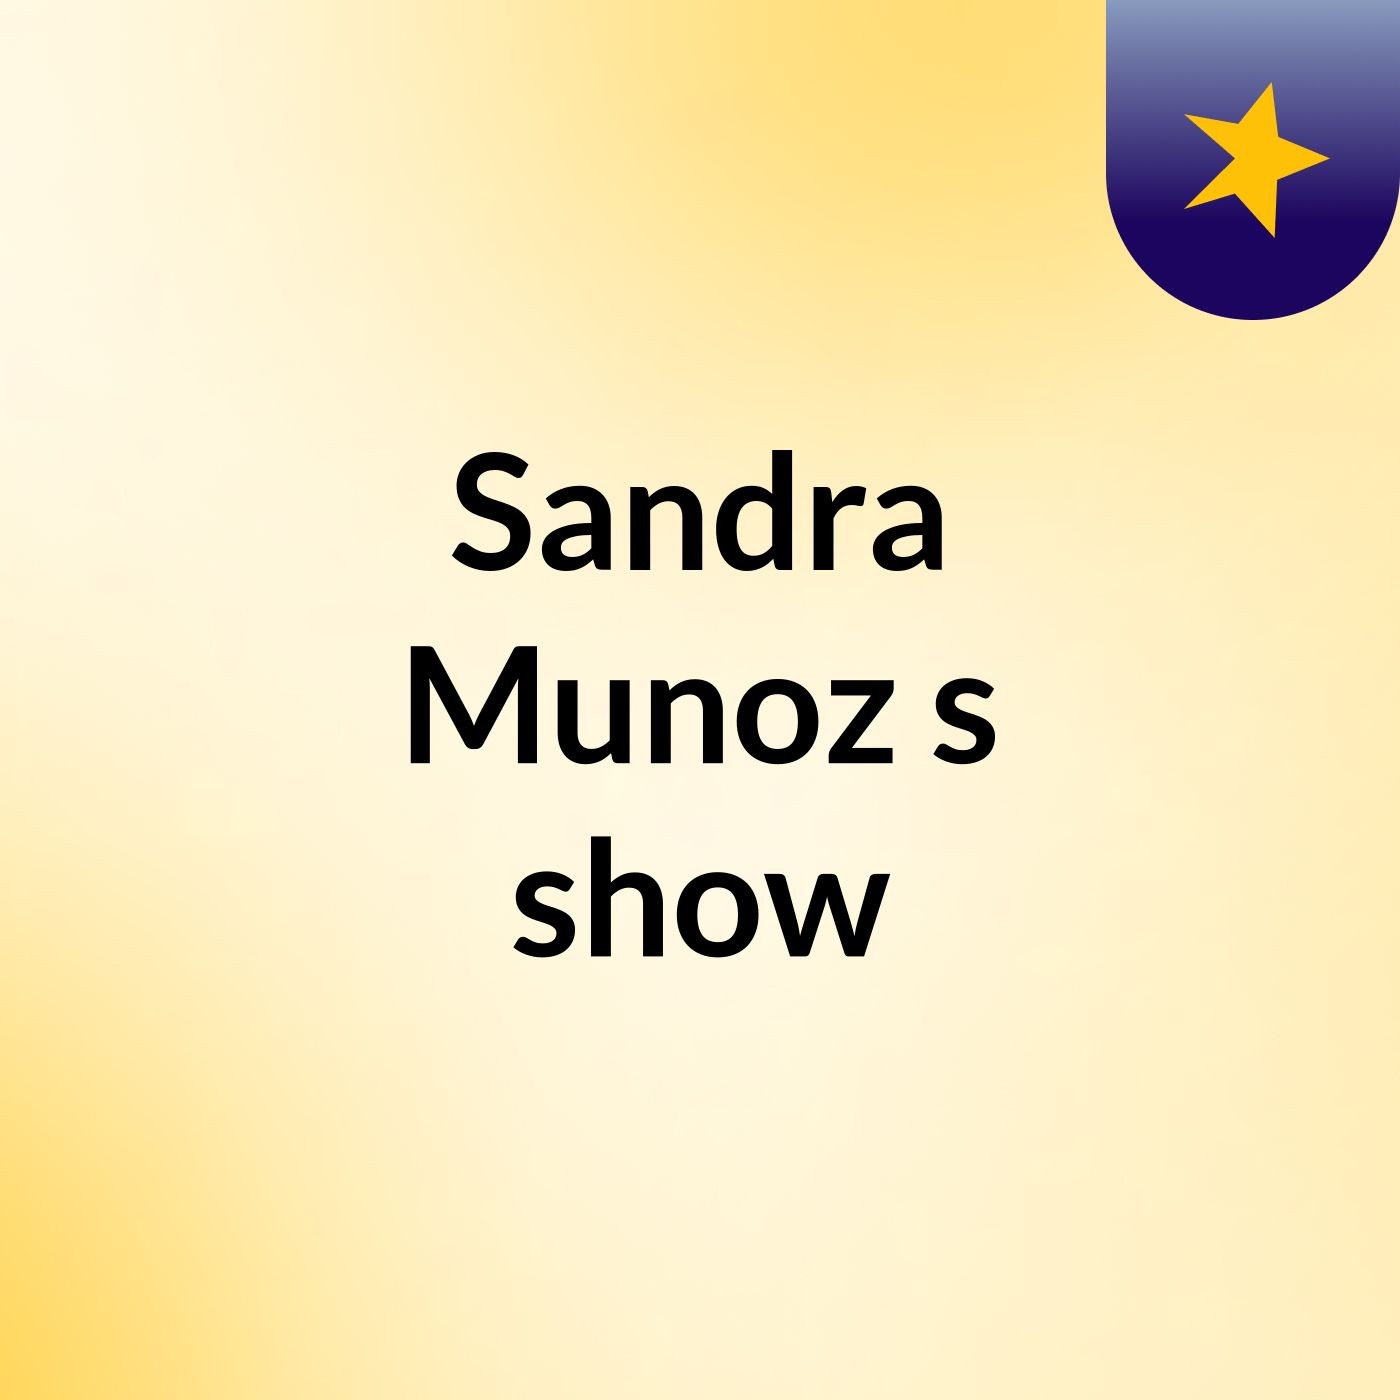 Sandra Munoz's show